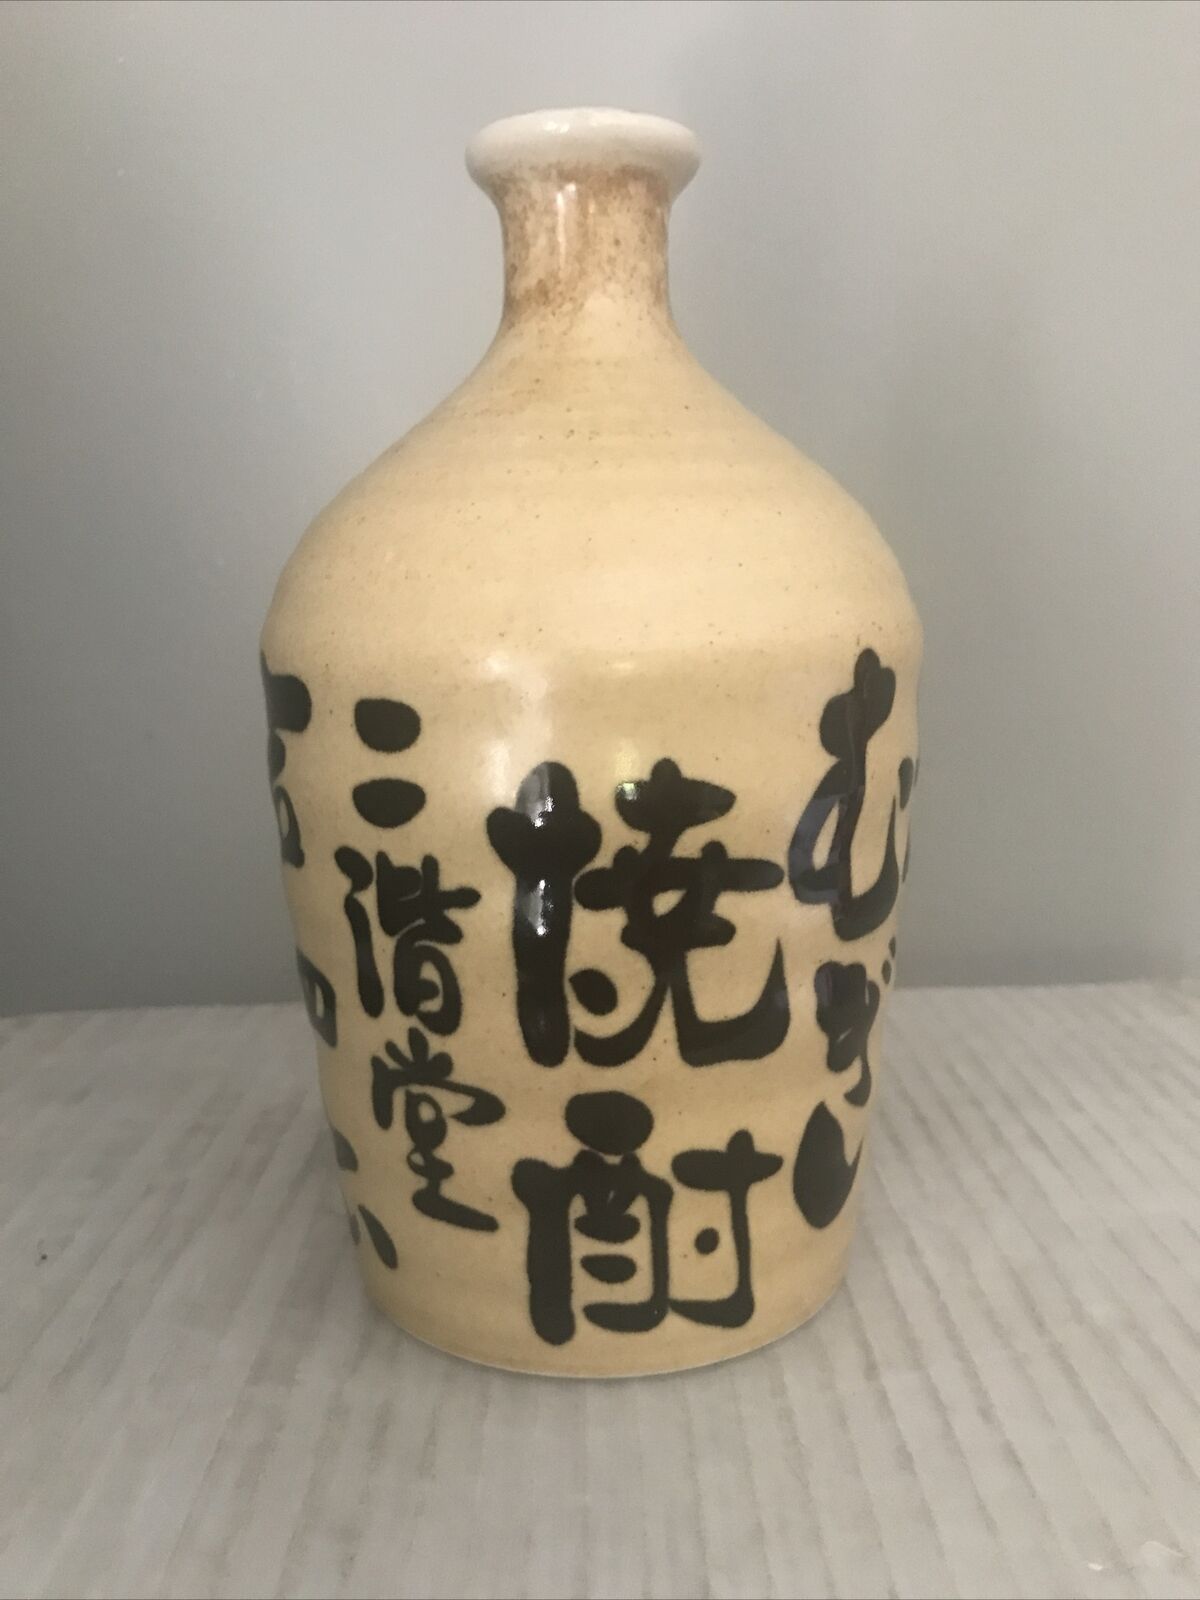 Vintage Japanese Pottery Sake Bottle Vase